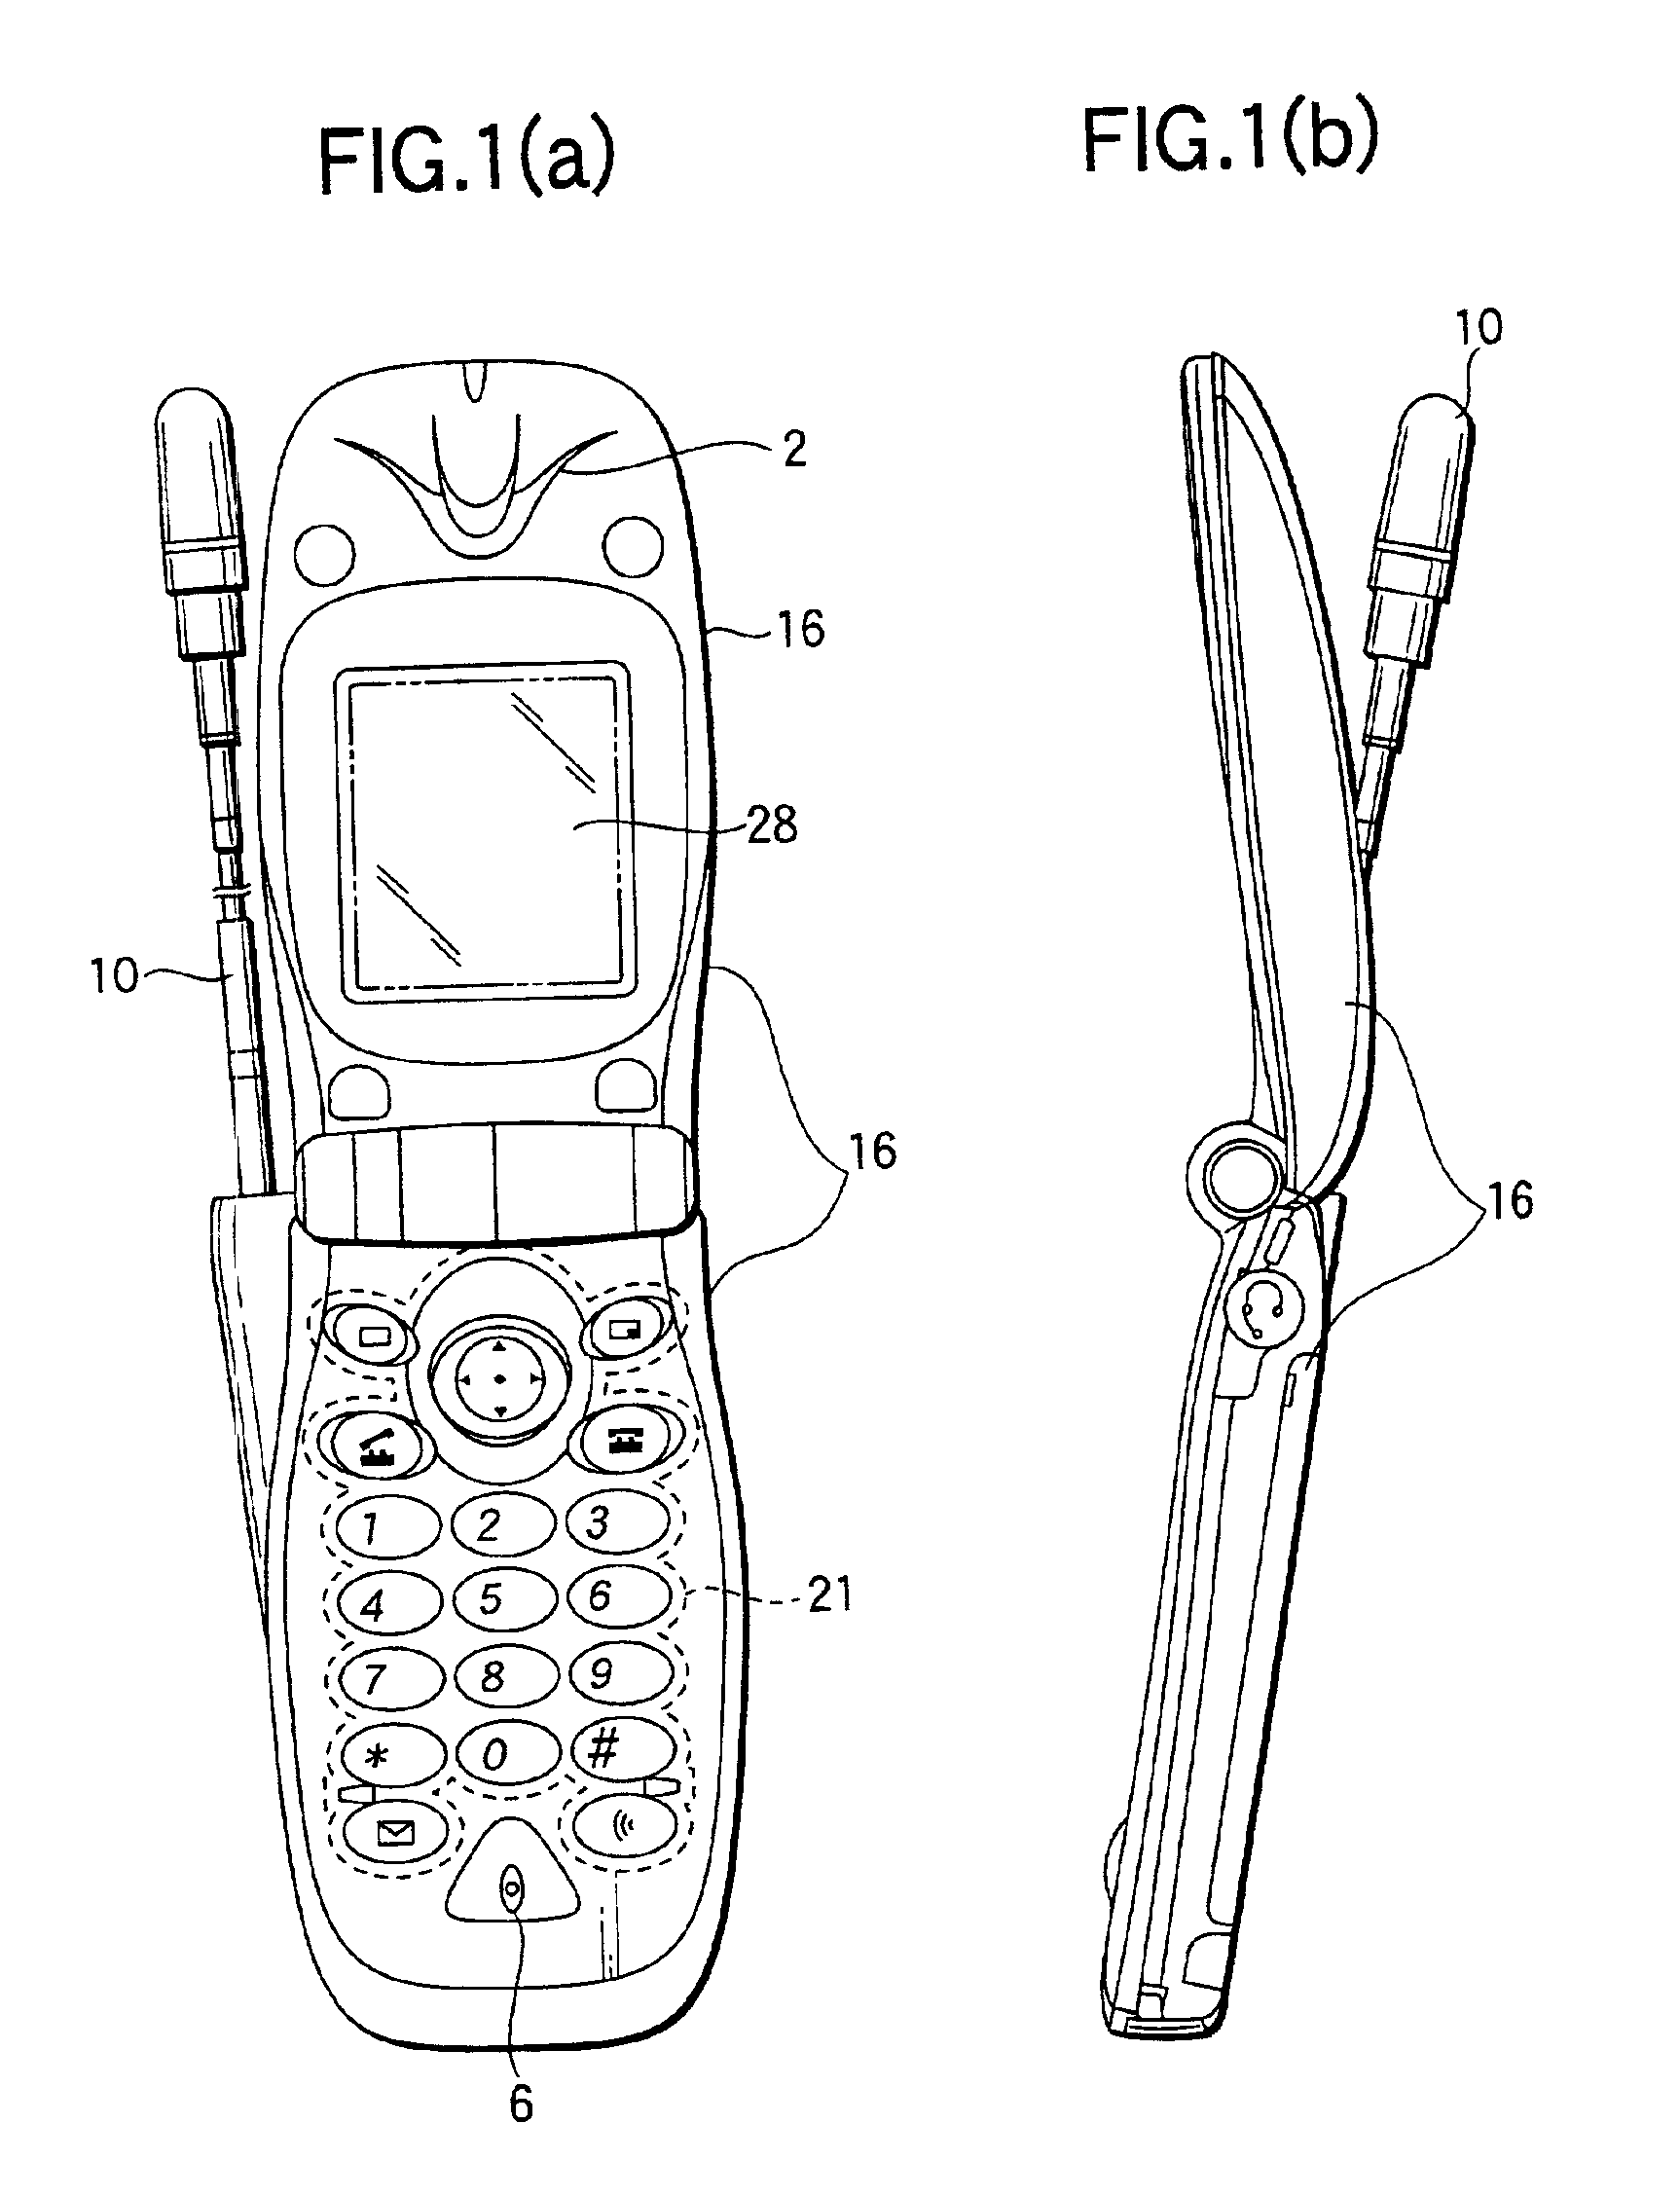 Folding portable radio device